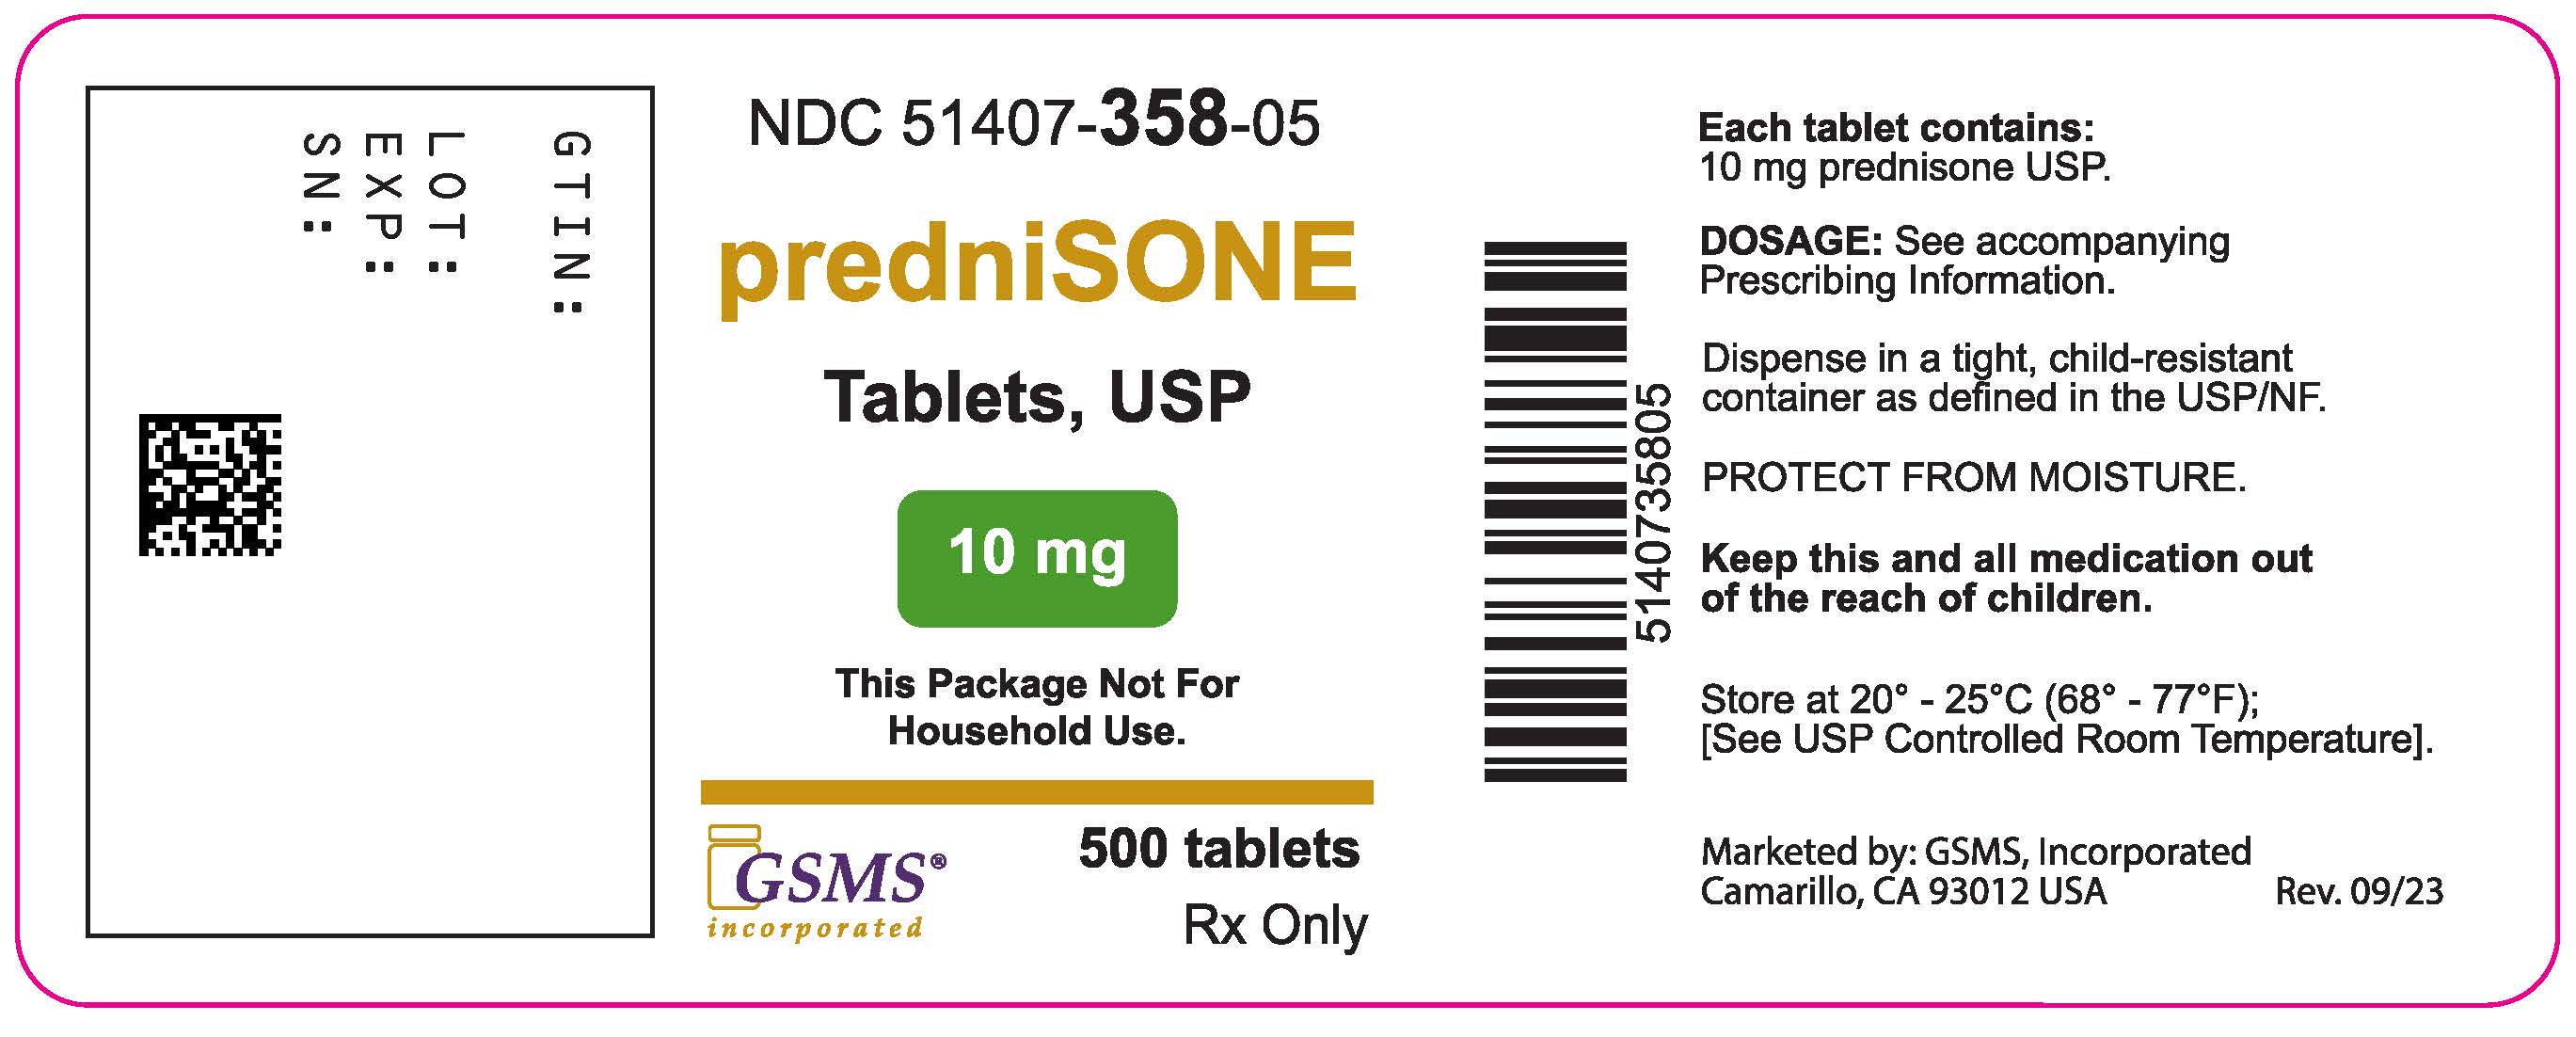 51407-358-05LB - Prednisone Tablets - Rev. 0923.jpg